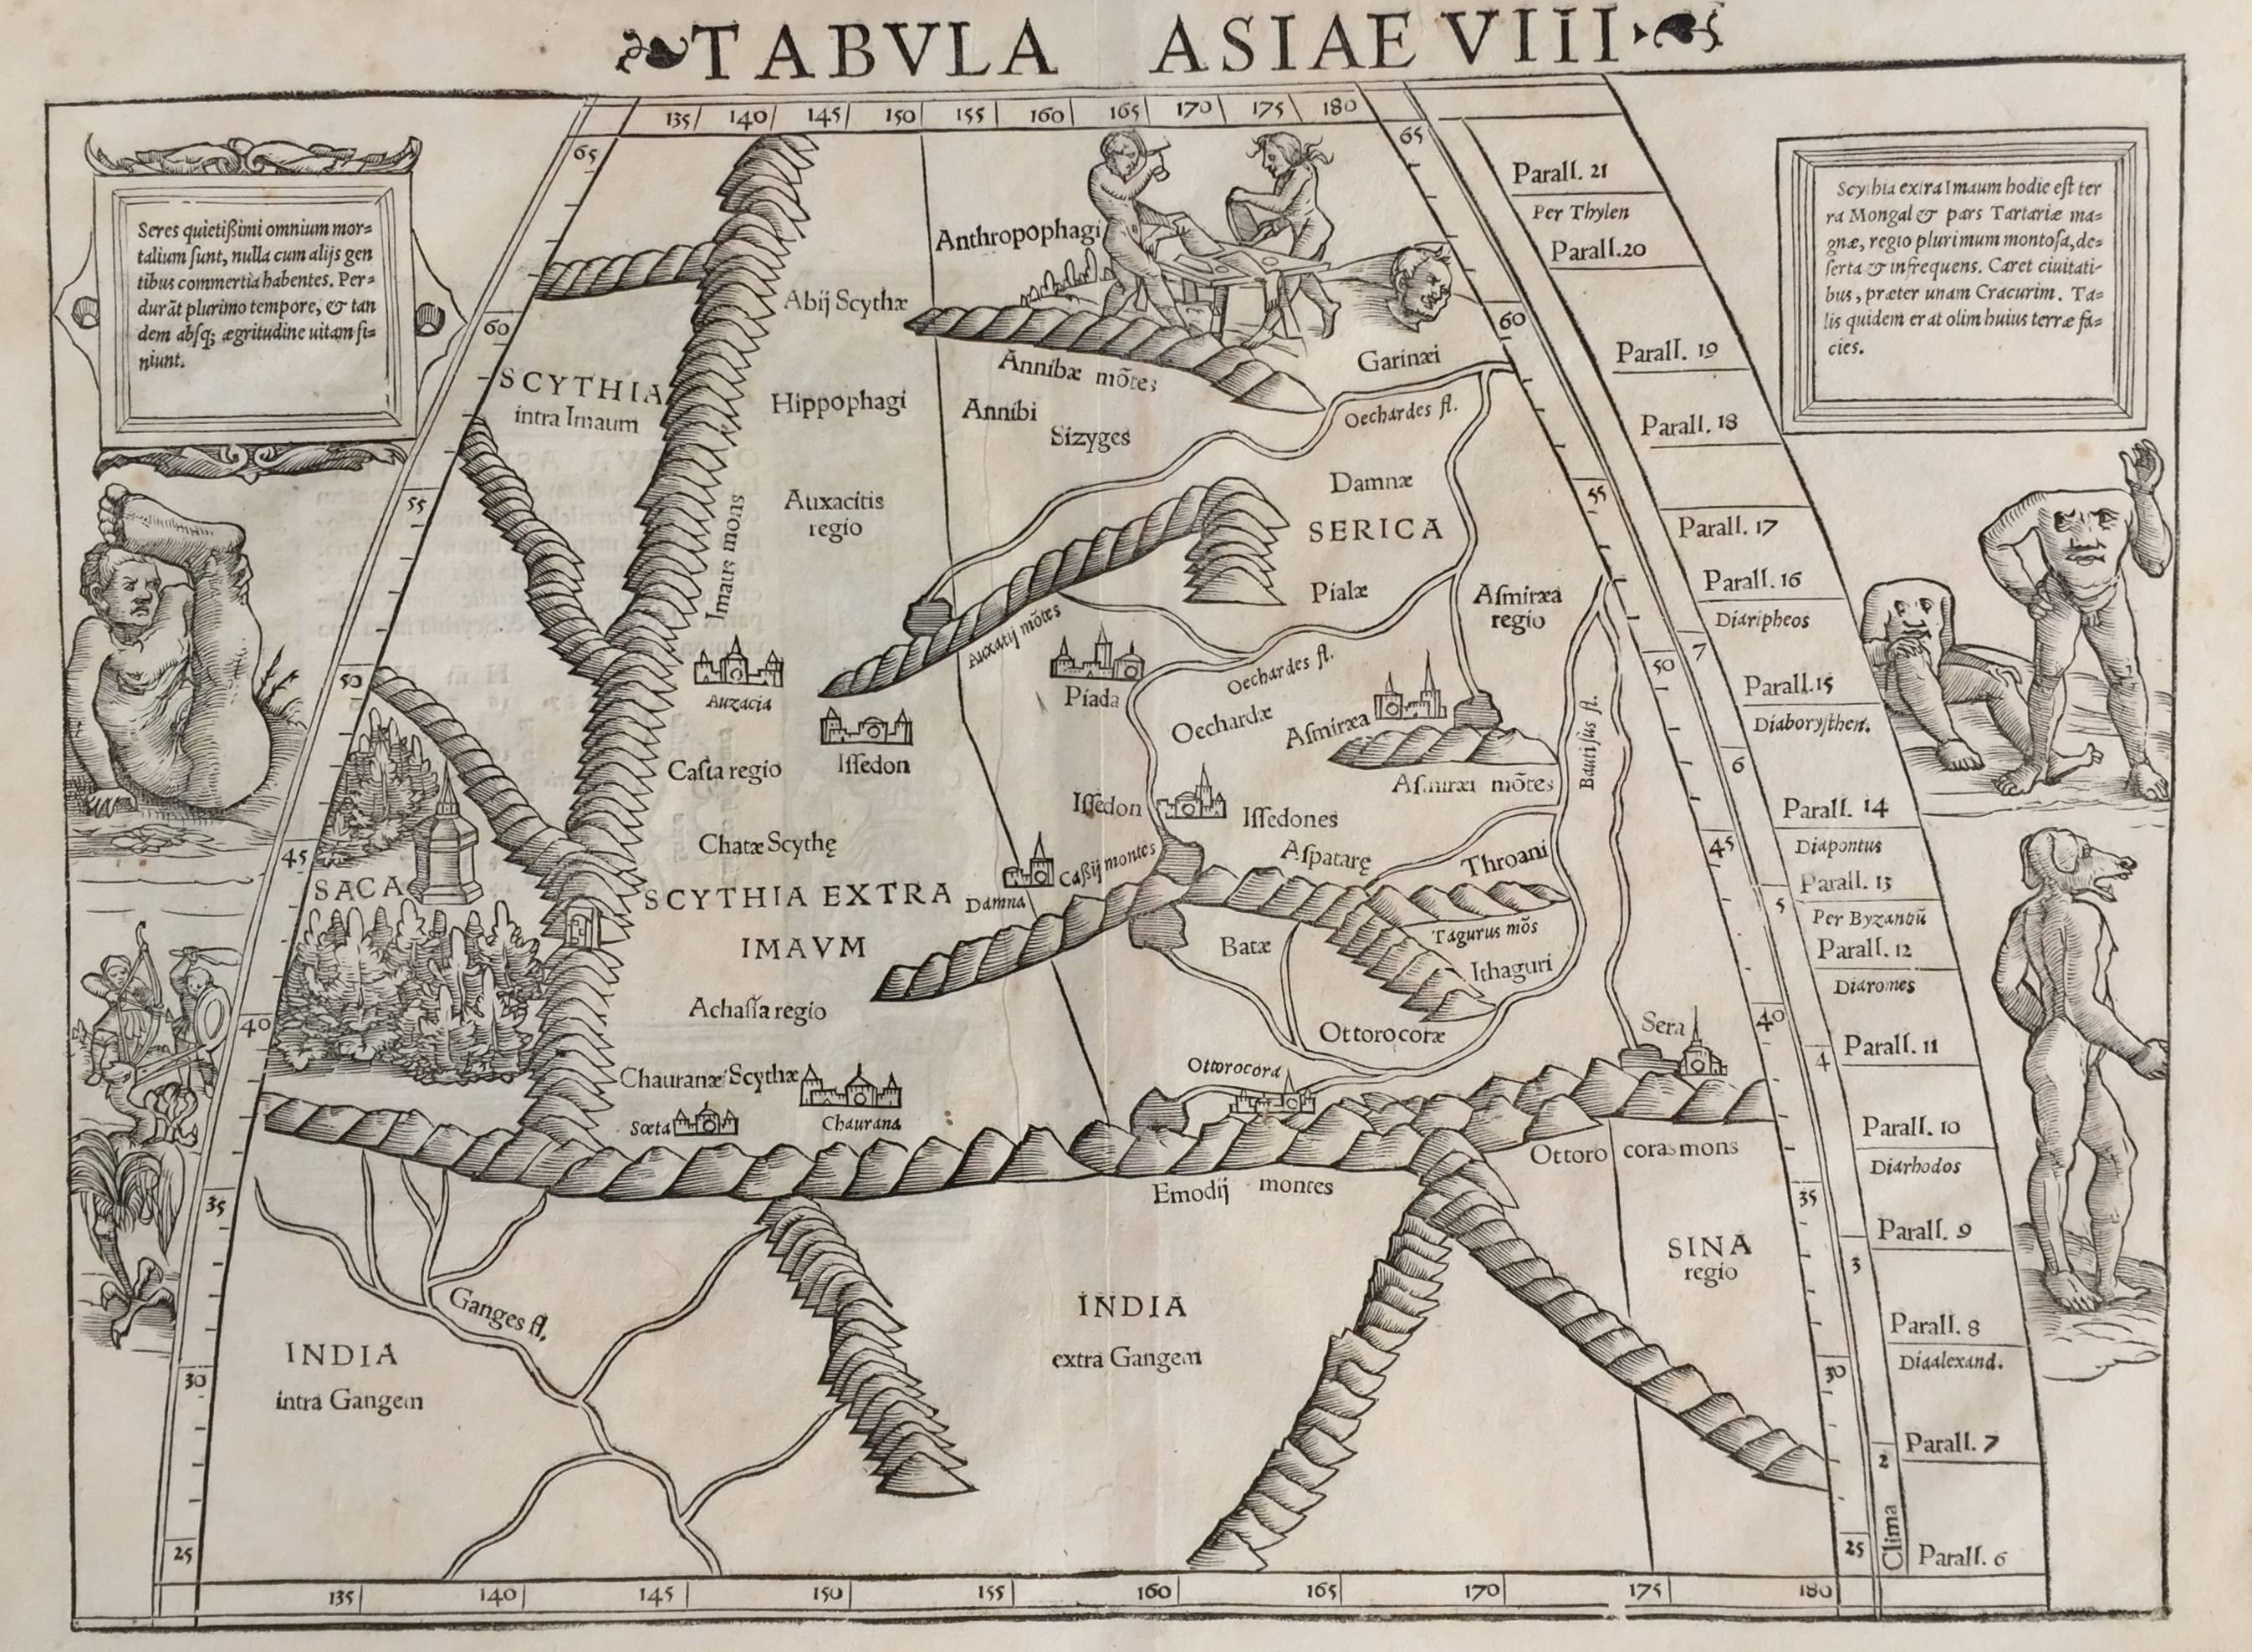 16th c. woodcut map - Tabula Asiae Vlll